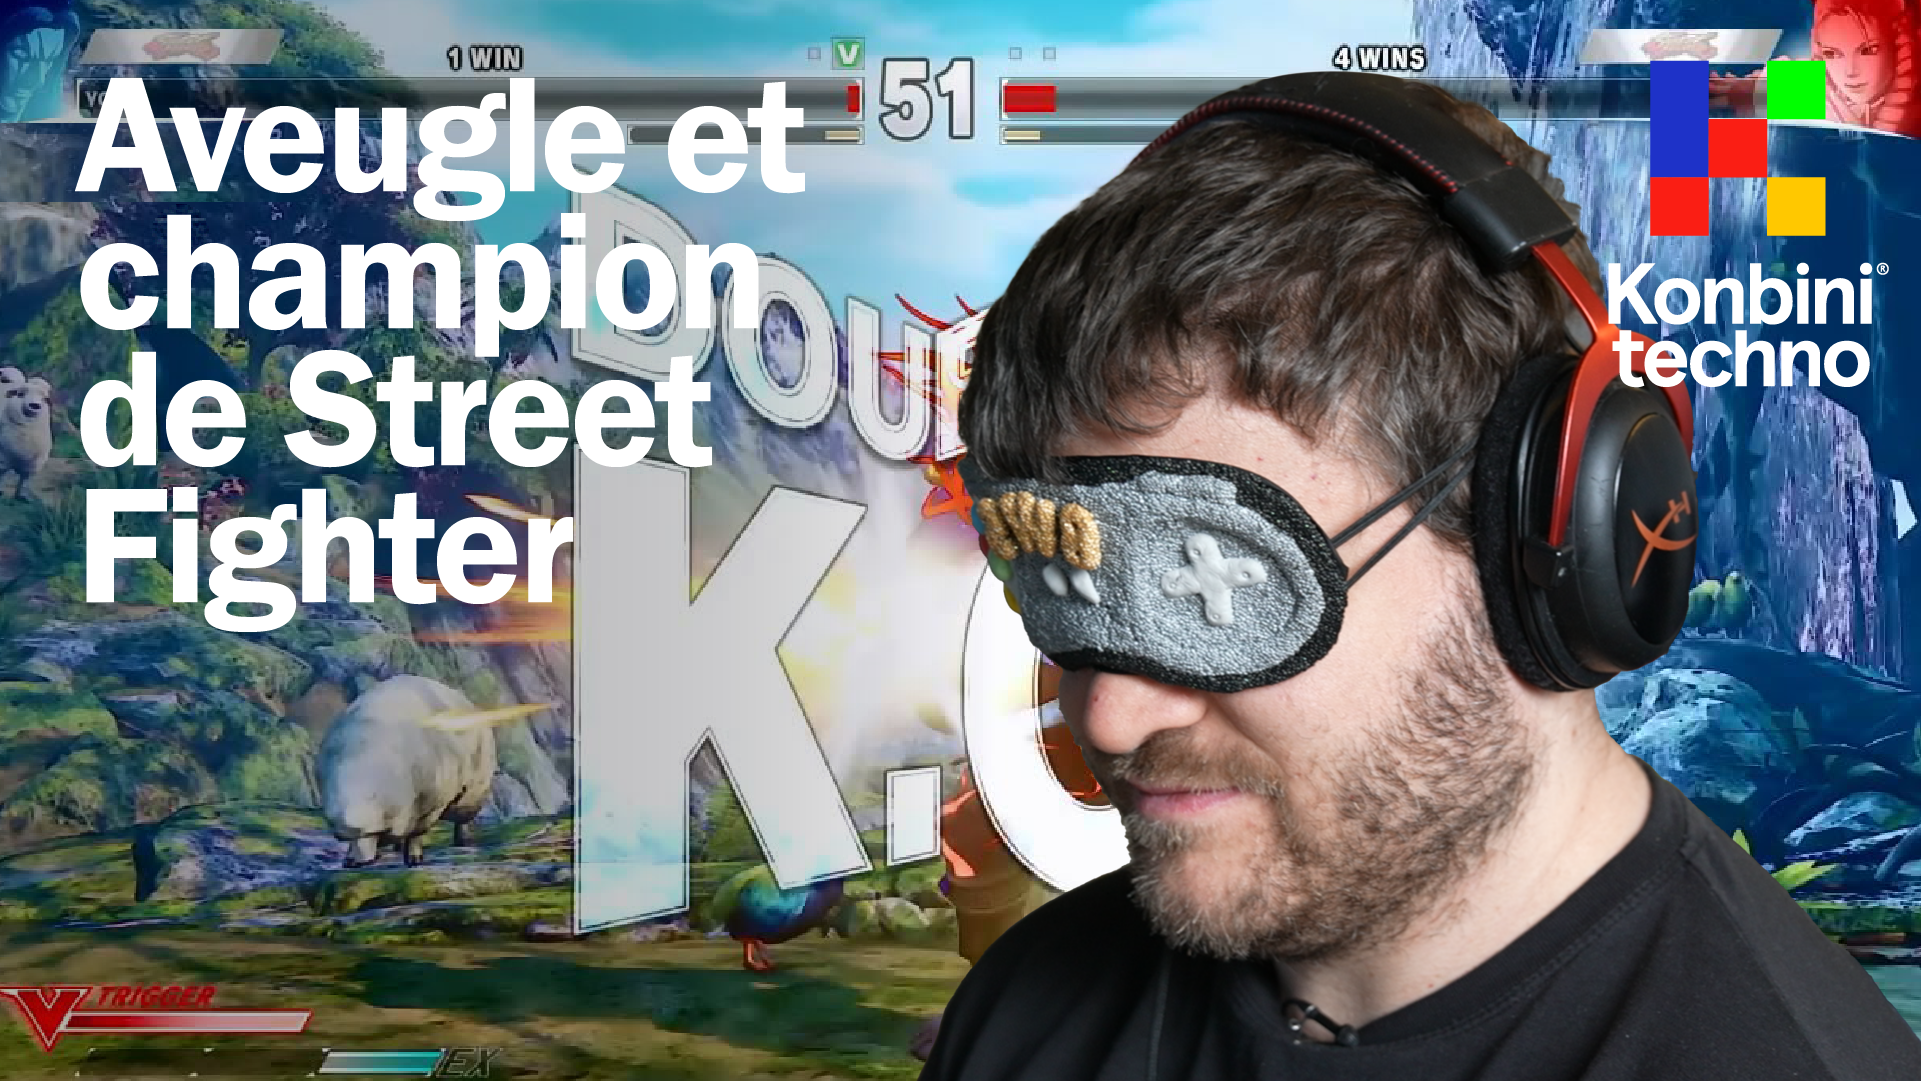 Aveugle et champion de “Street Fighter” : Sven raconte sa folle histoire | Reportage